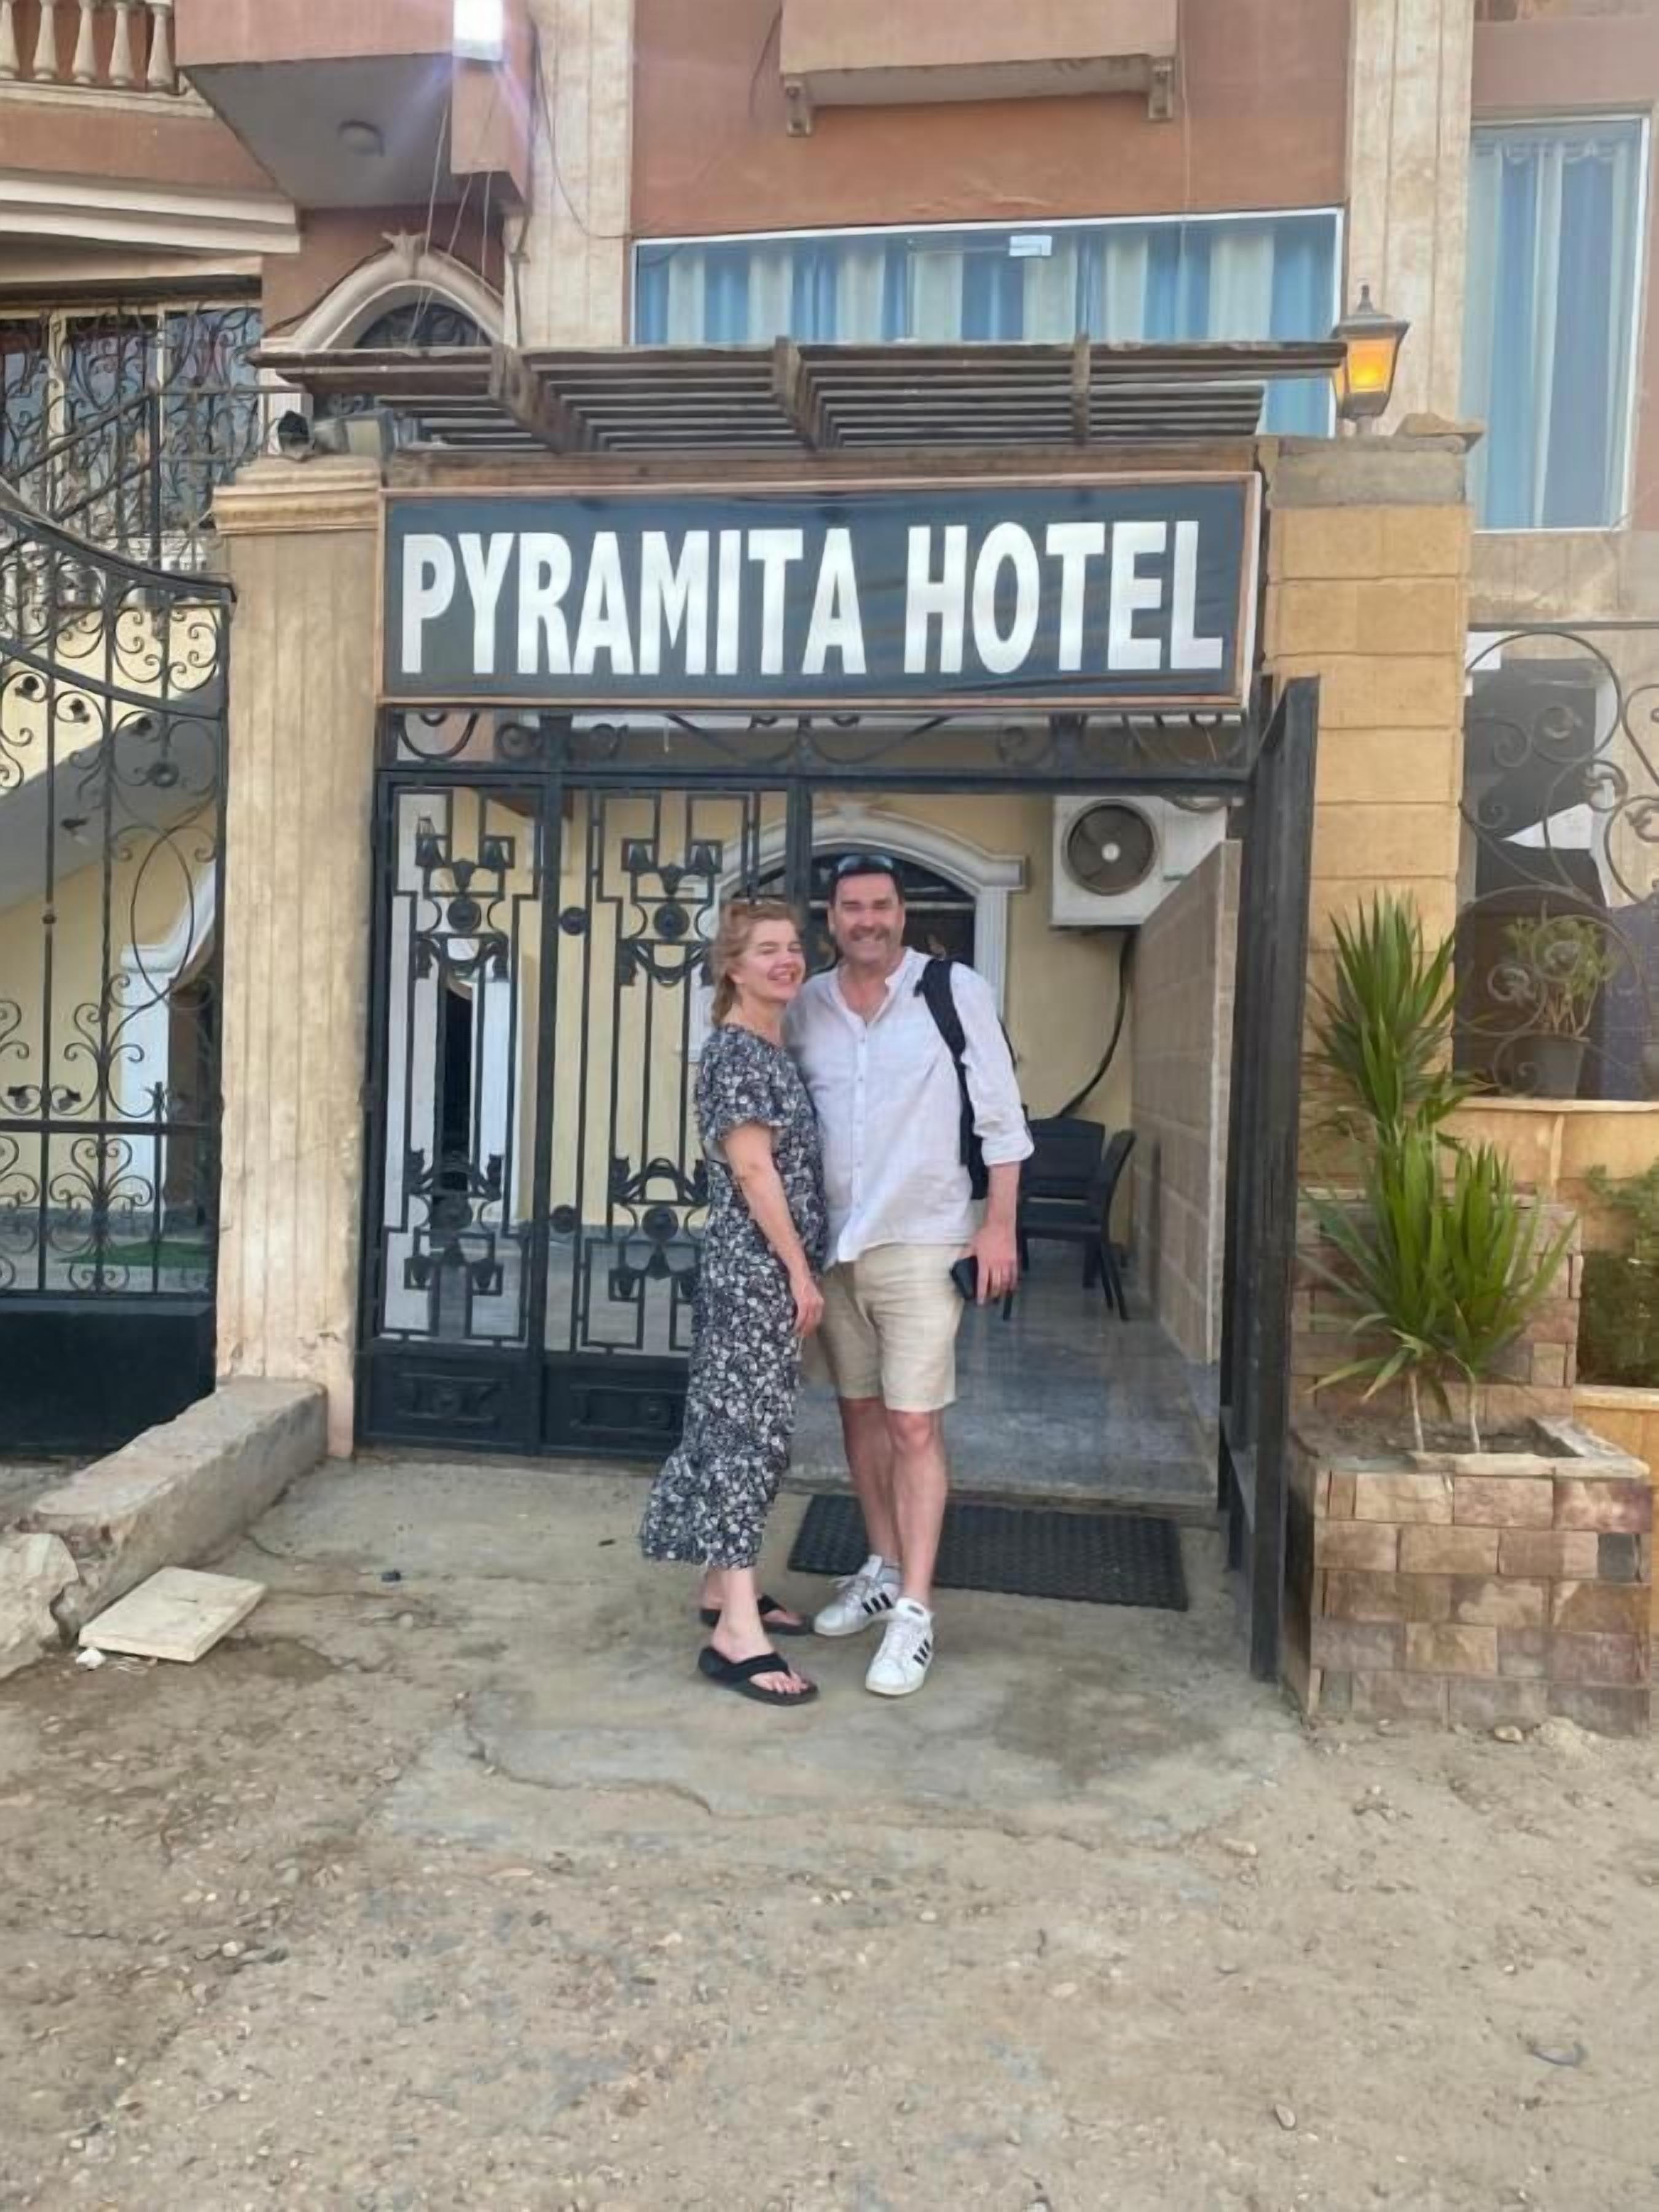 Pyramita Hotel